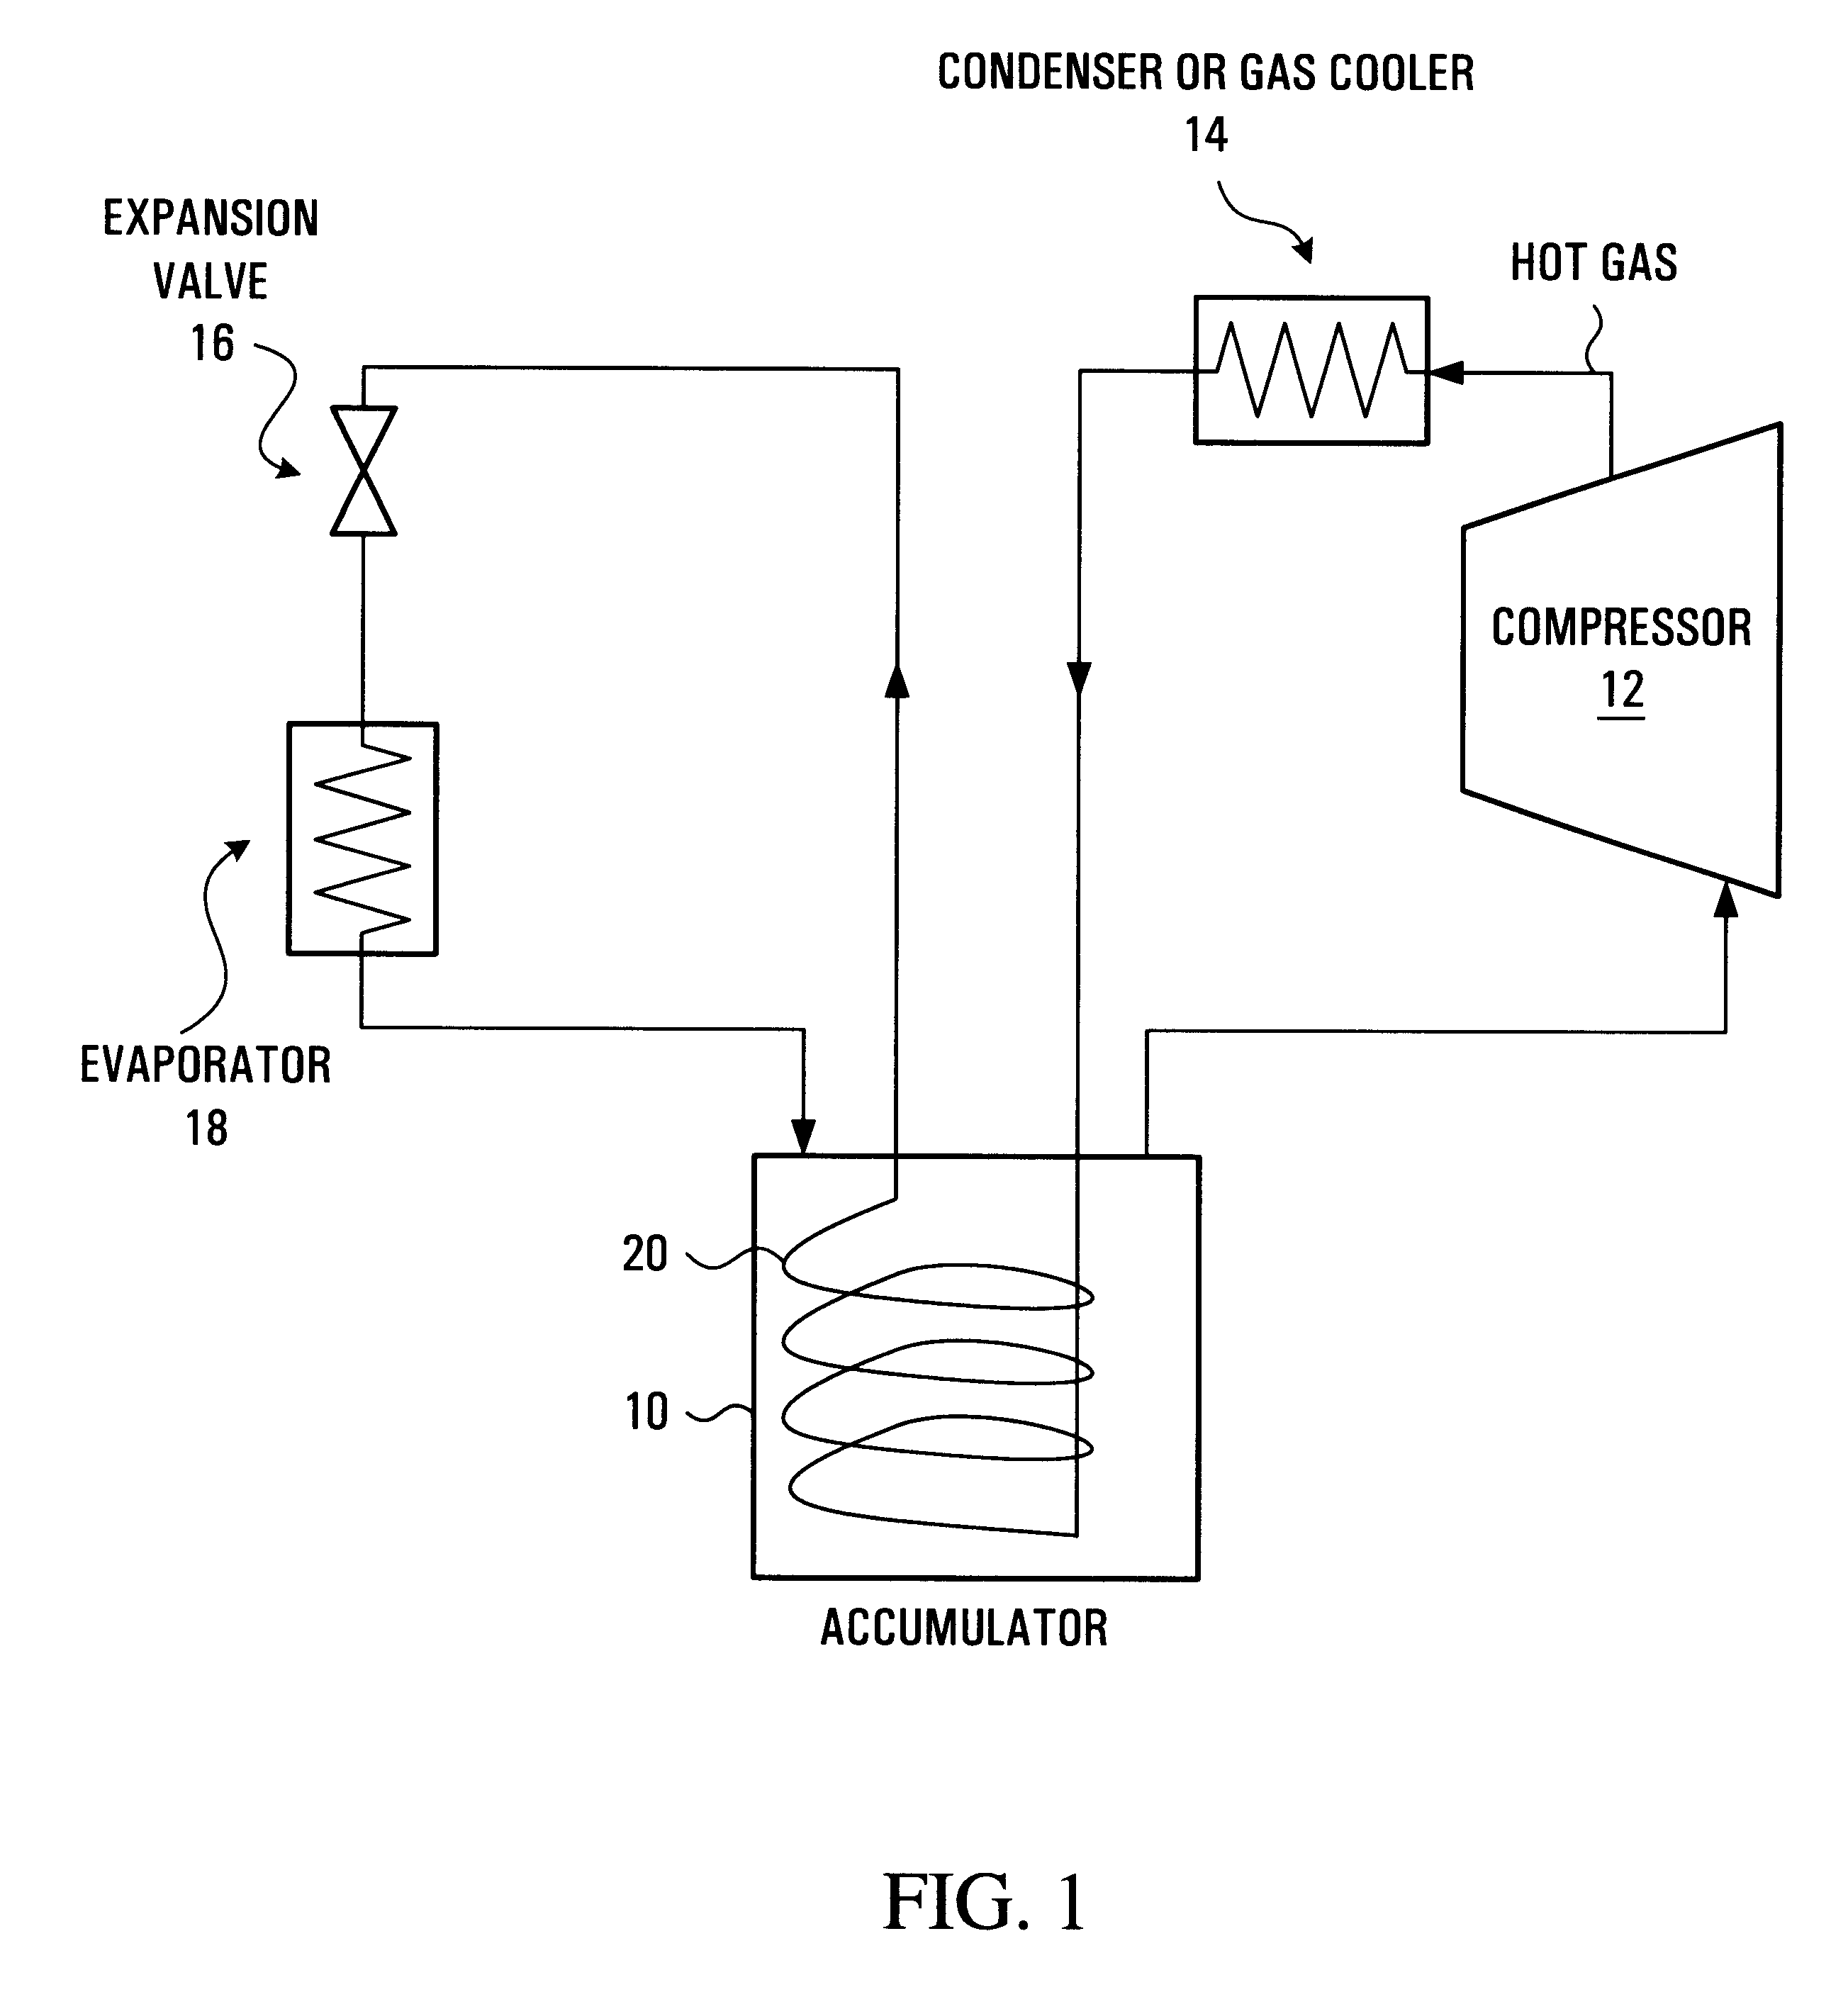 Internal heat exchanger accumulator